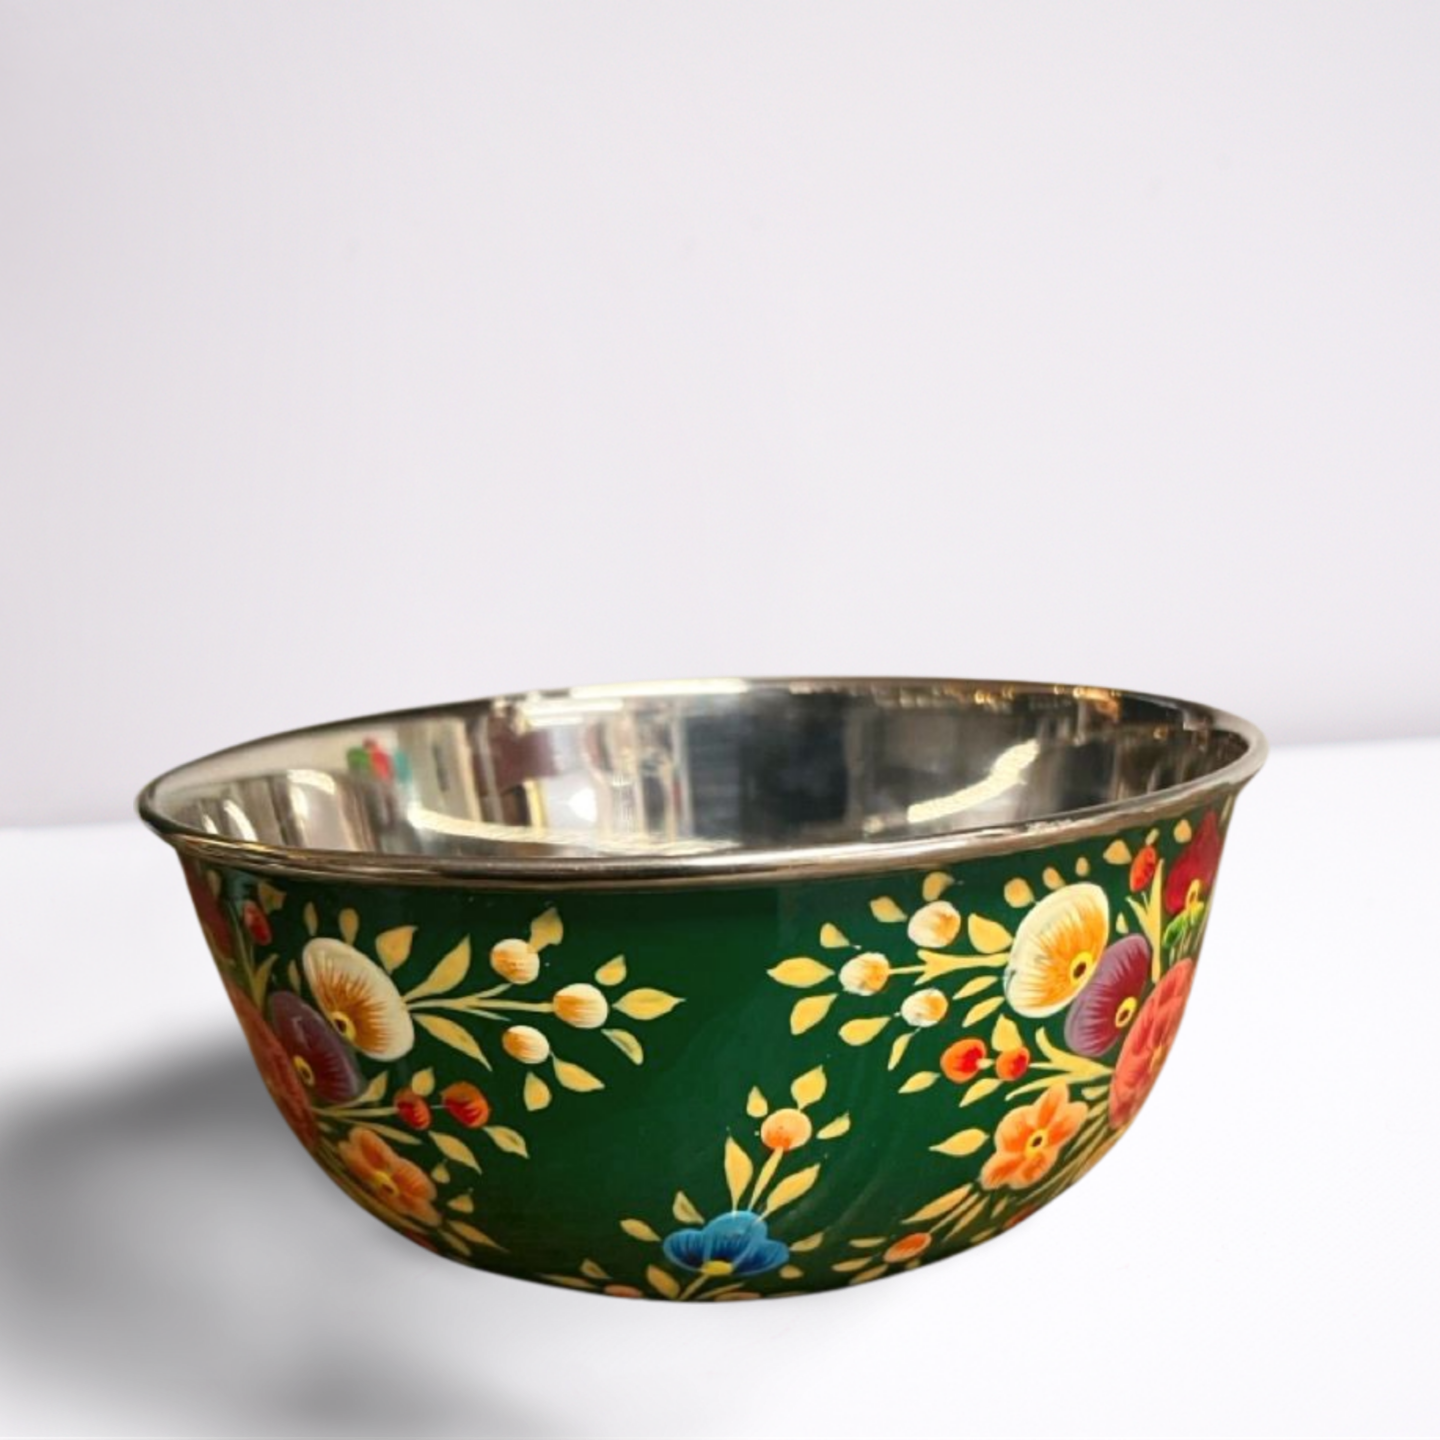 Hand Painted Enamel Food Bowls - Medium